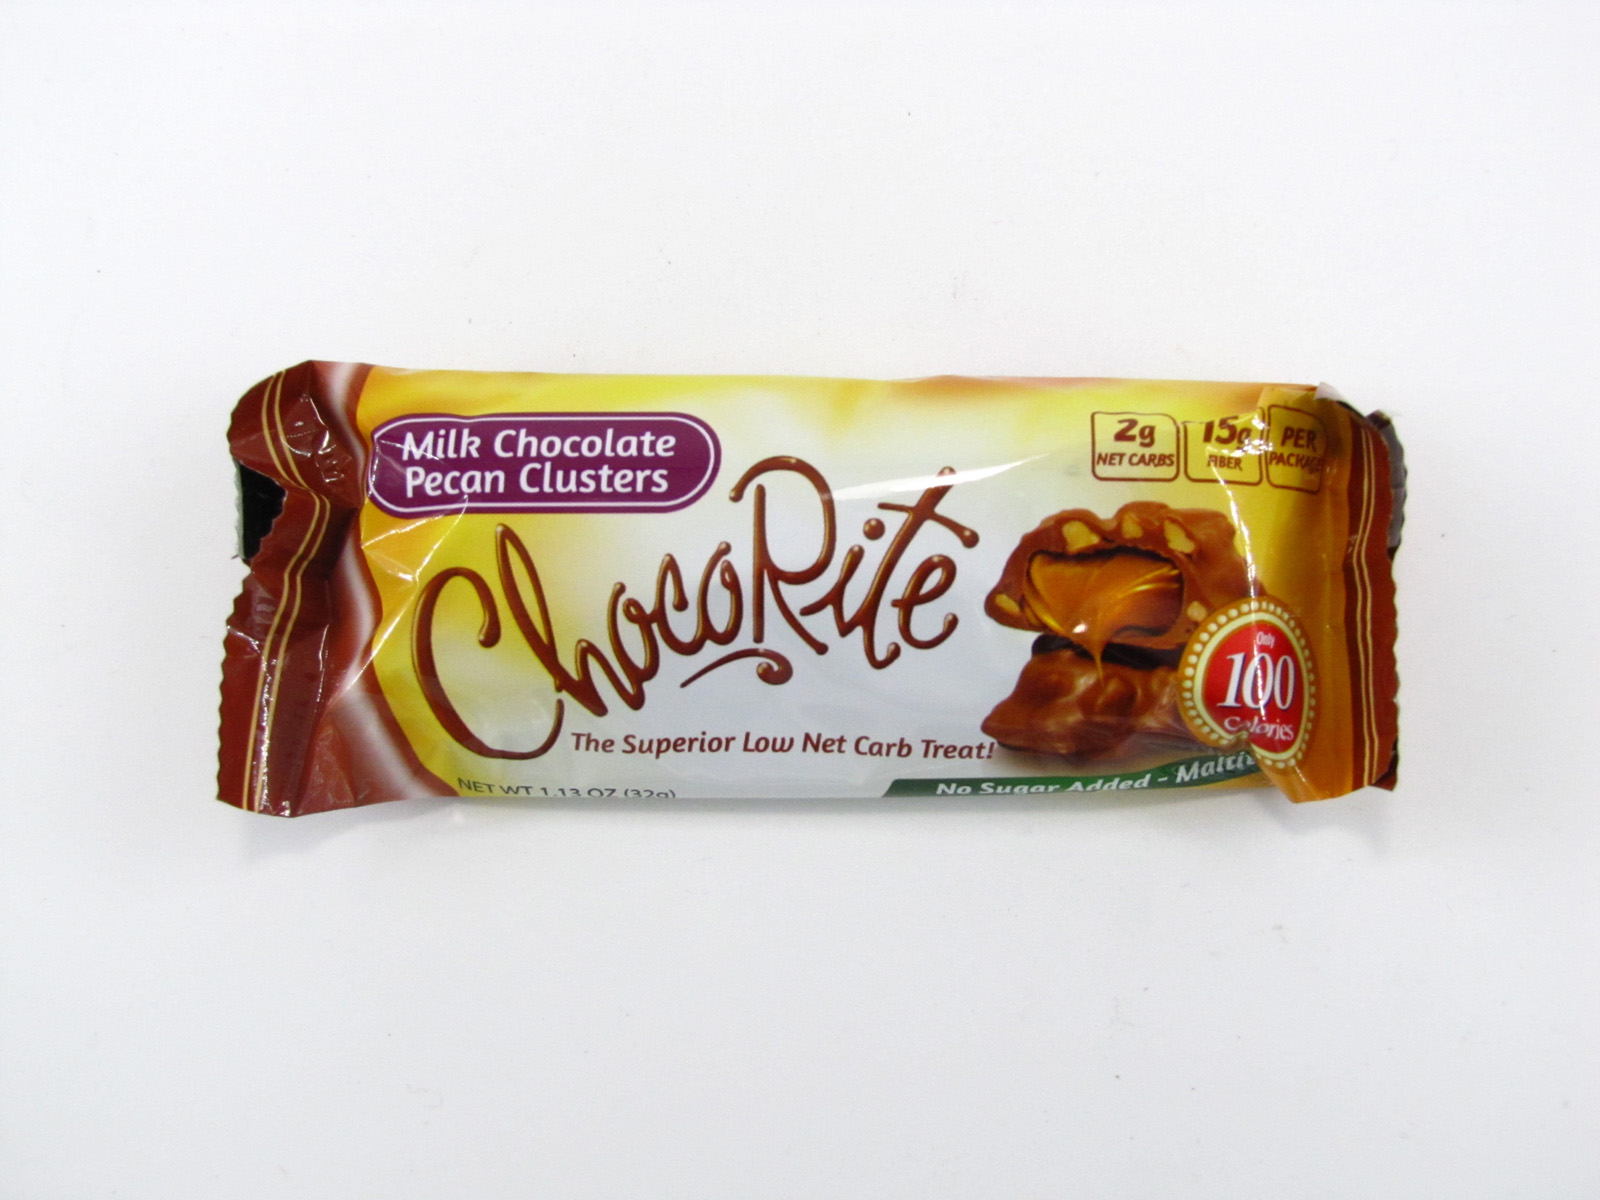 Chocorite Bar (32g) - Milk Chocolate Pecan Cluster - front view